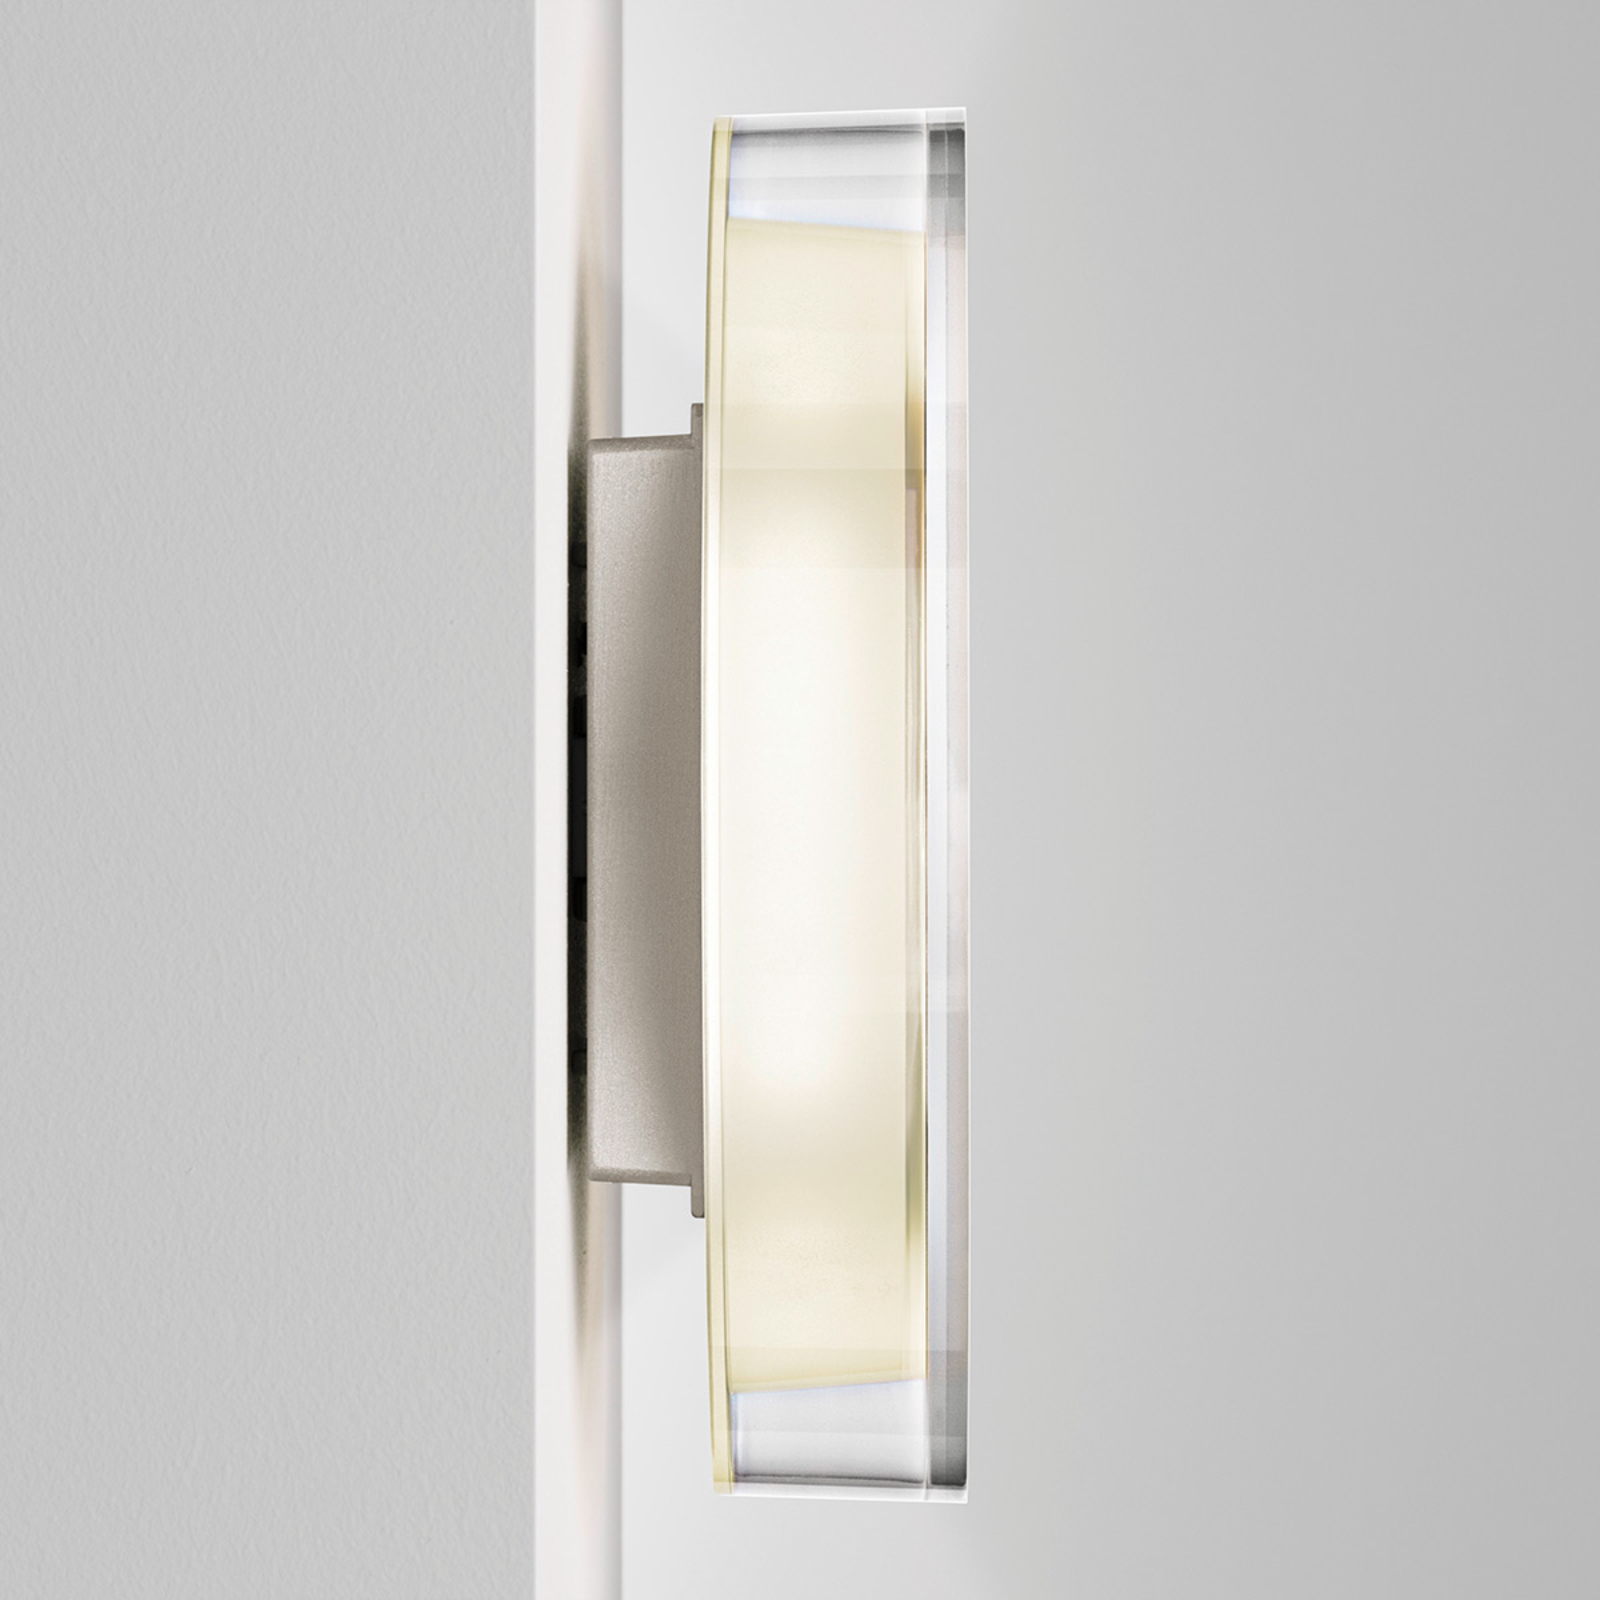 Mirrored LED designer wall light Lid